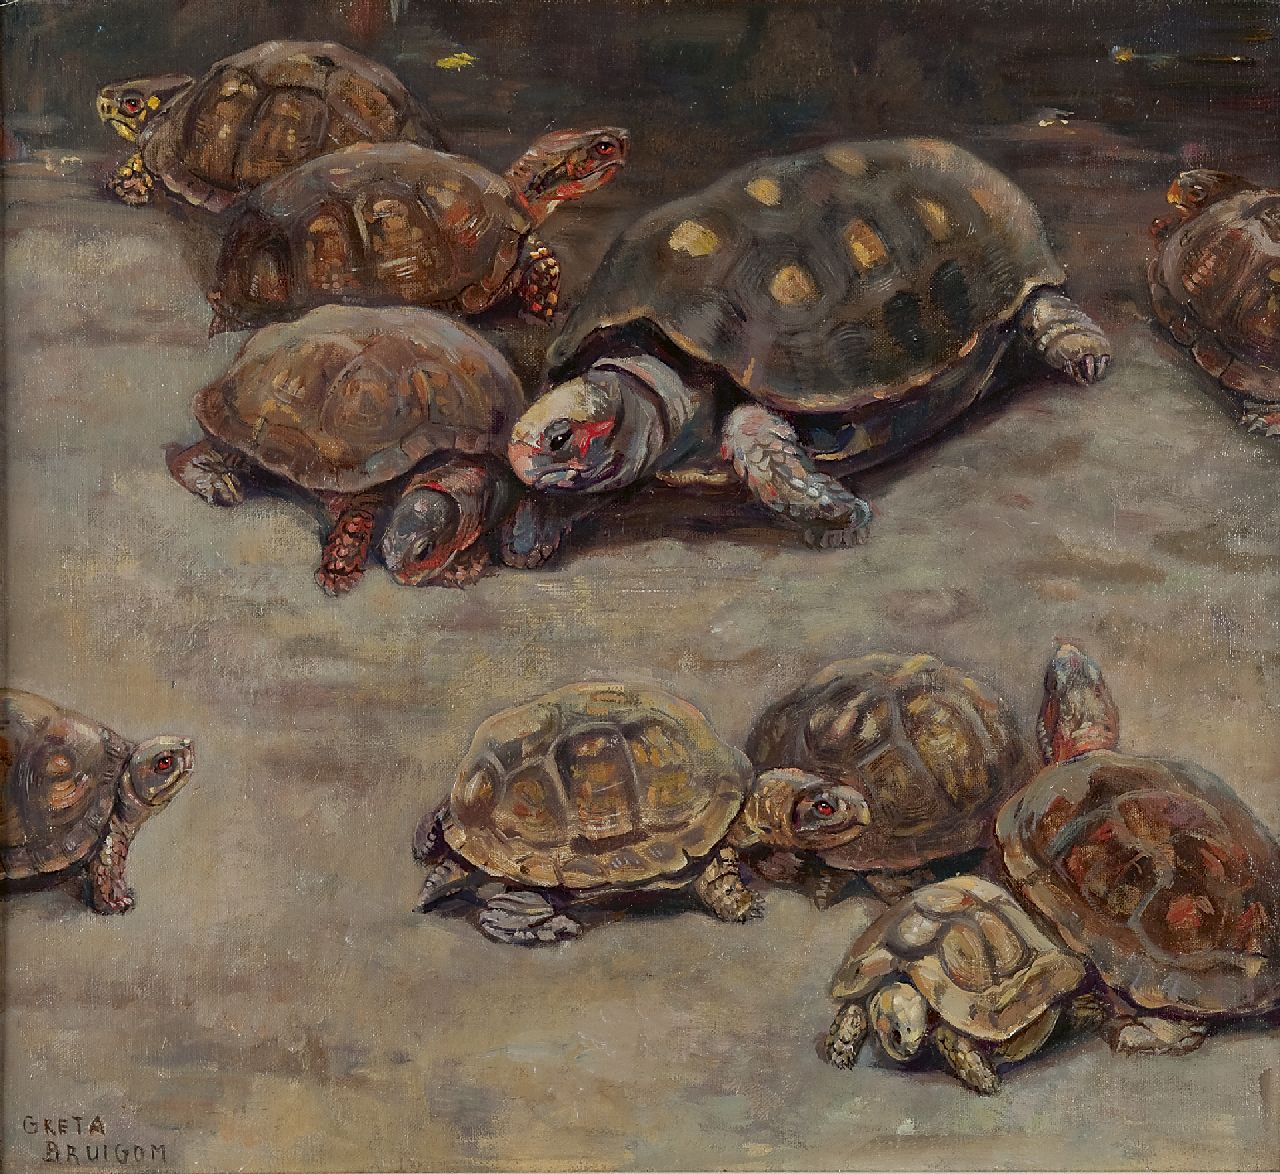 Bruigom M.C.  | Margaretha Cornelia 'Greta' Bruigom, Schildpadden, olieverf op doek 47,7 x 52,5 cm, gesigneerd linksonder